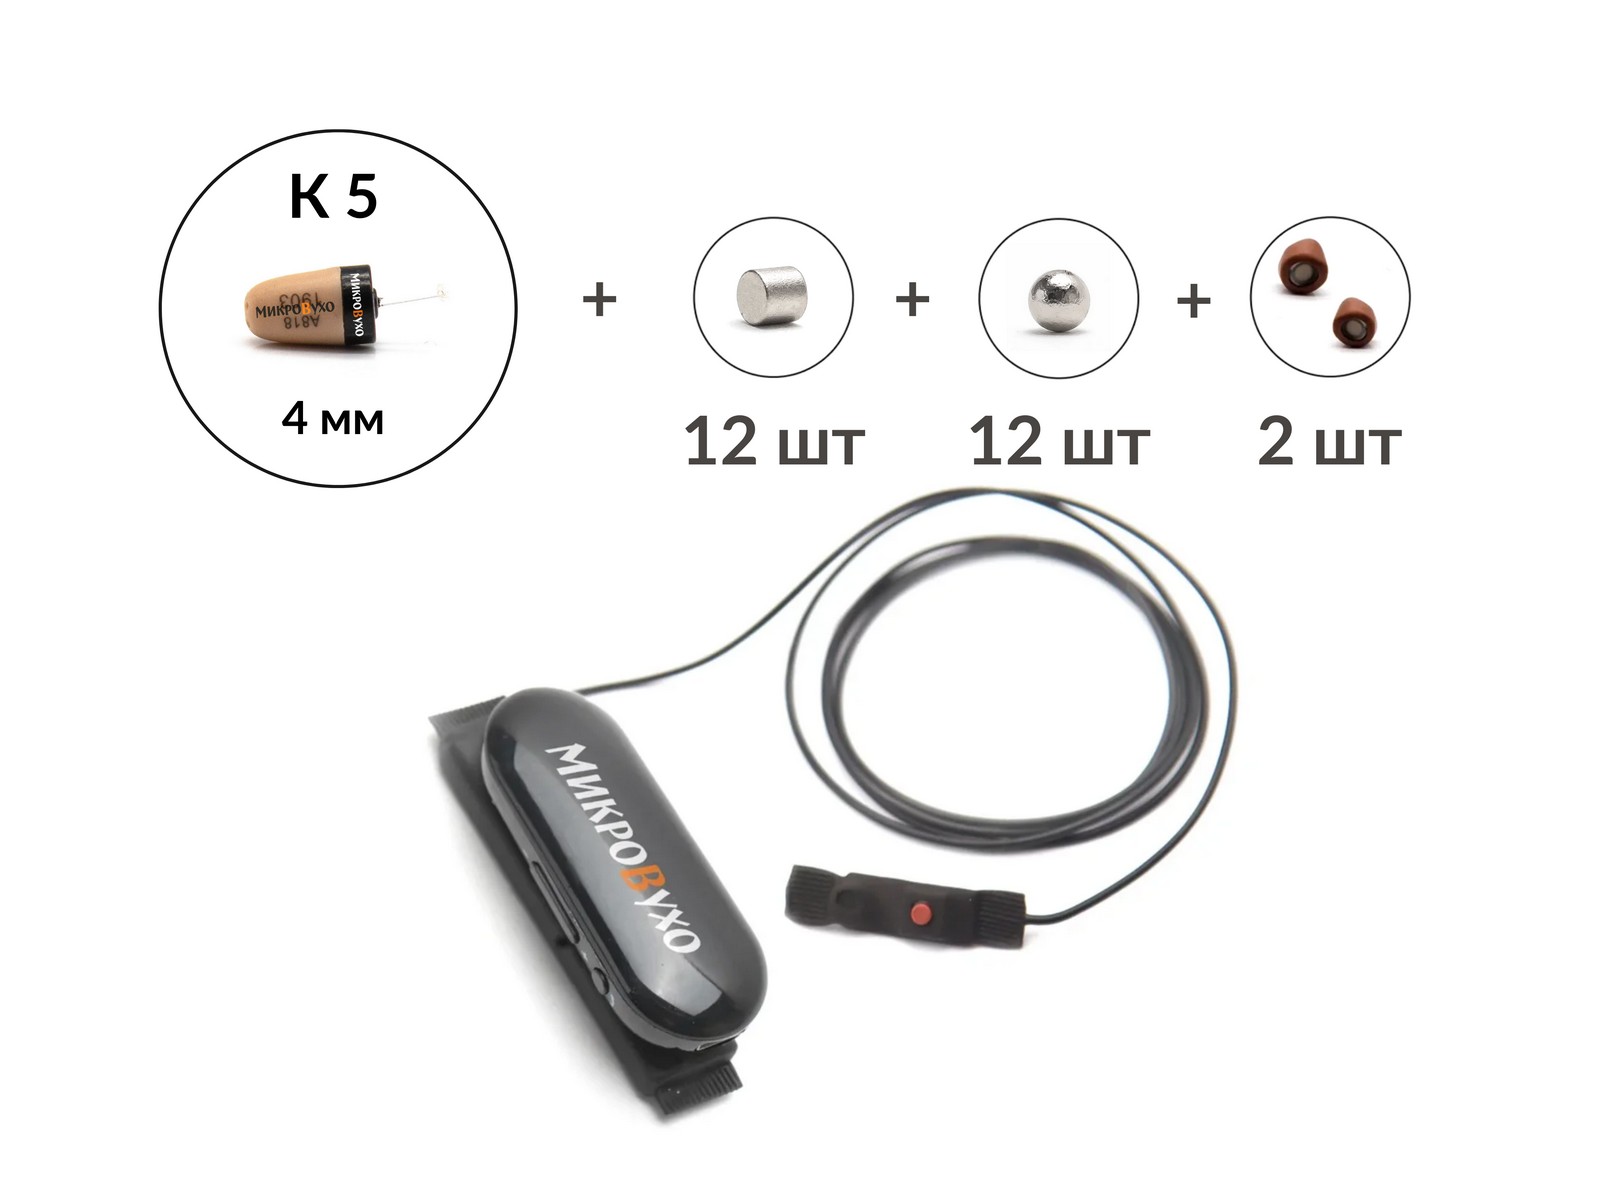 Bluetooth Box Pro Plus c кнопкой-пищалкой, капсулой К5 4 мм и 26 магнитами 1